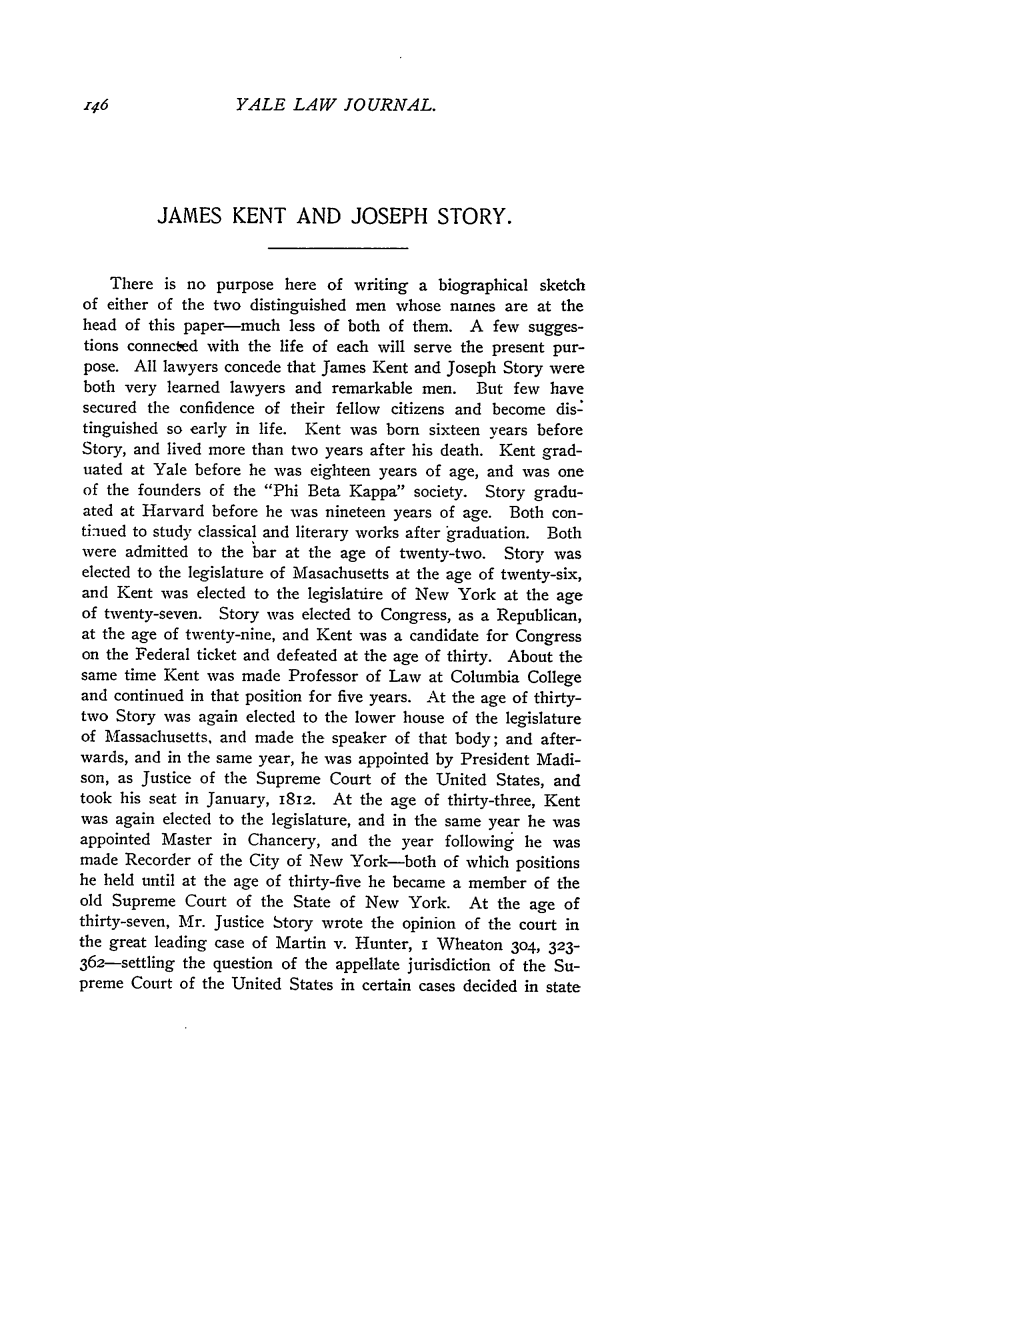 James Kent and Joseph Story